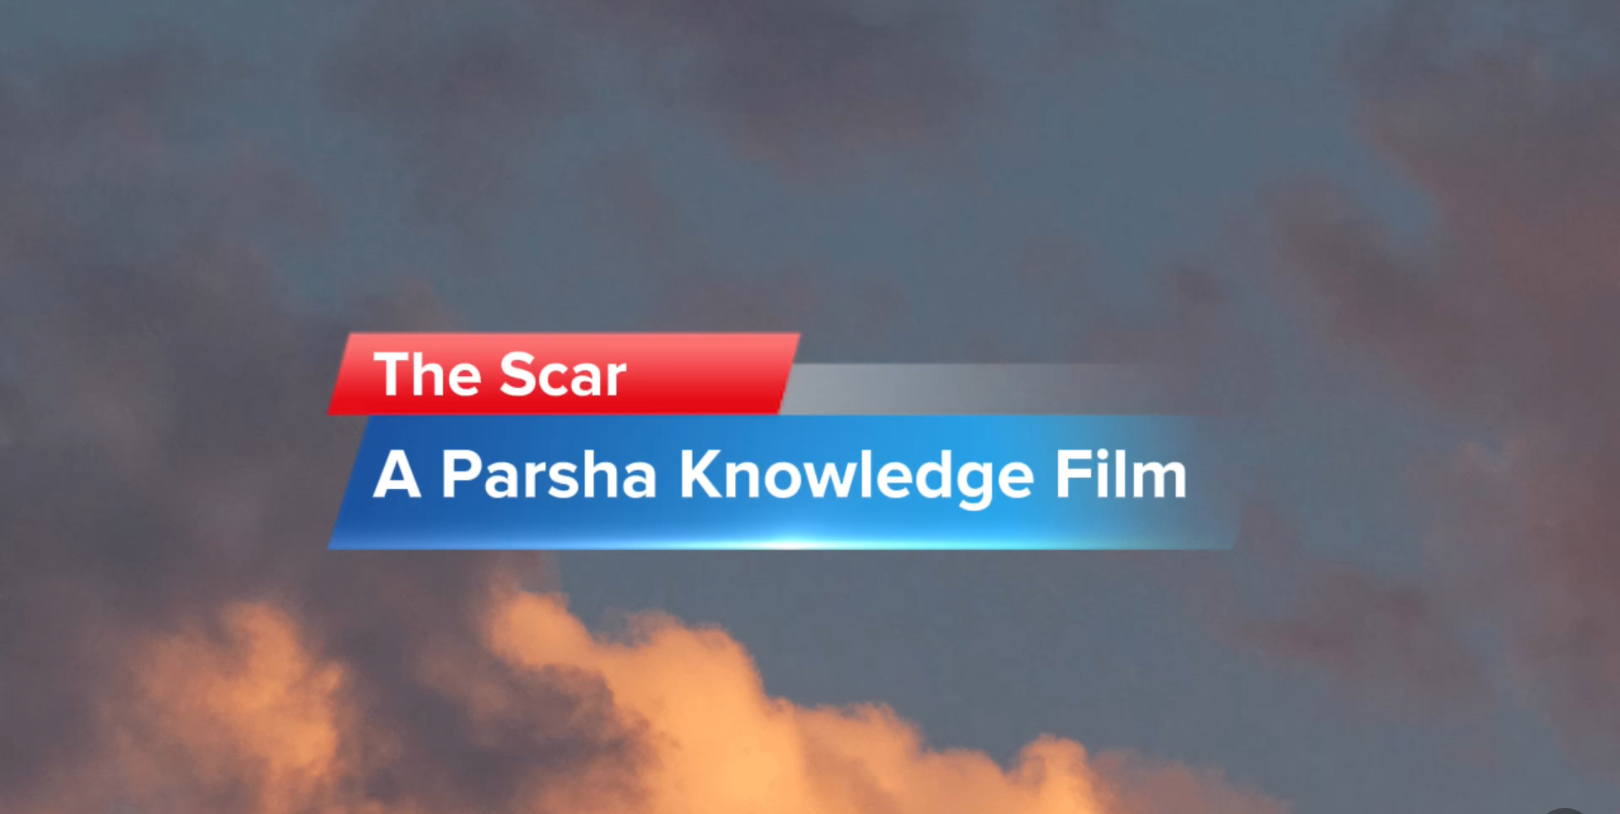 The Scar: A Parsha Knowledge Film